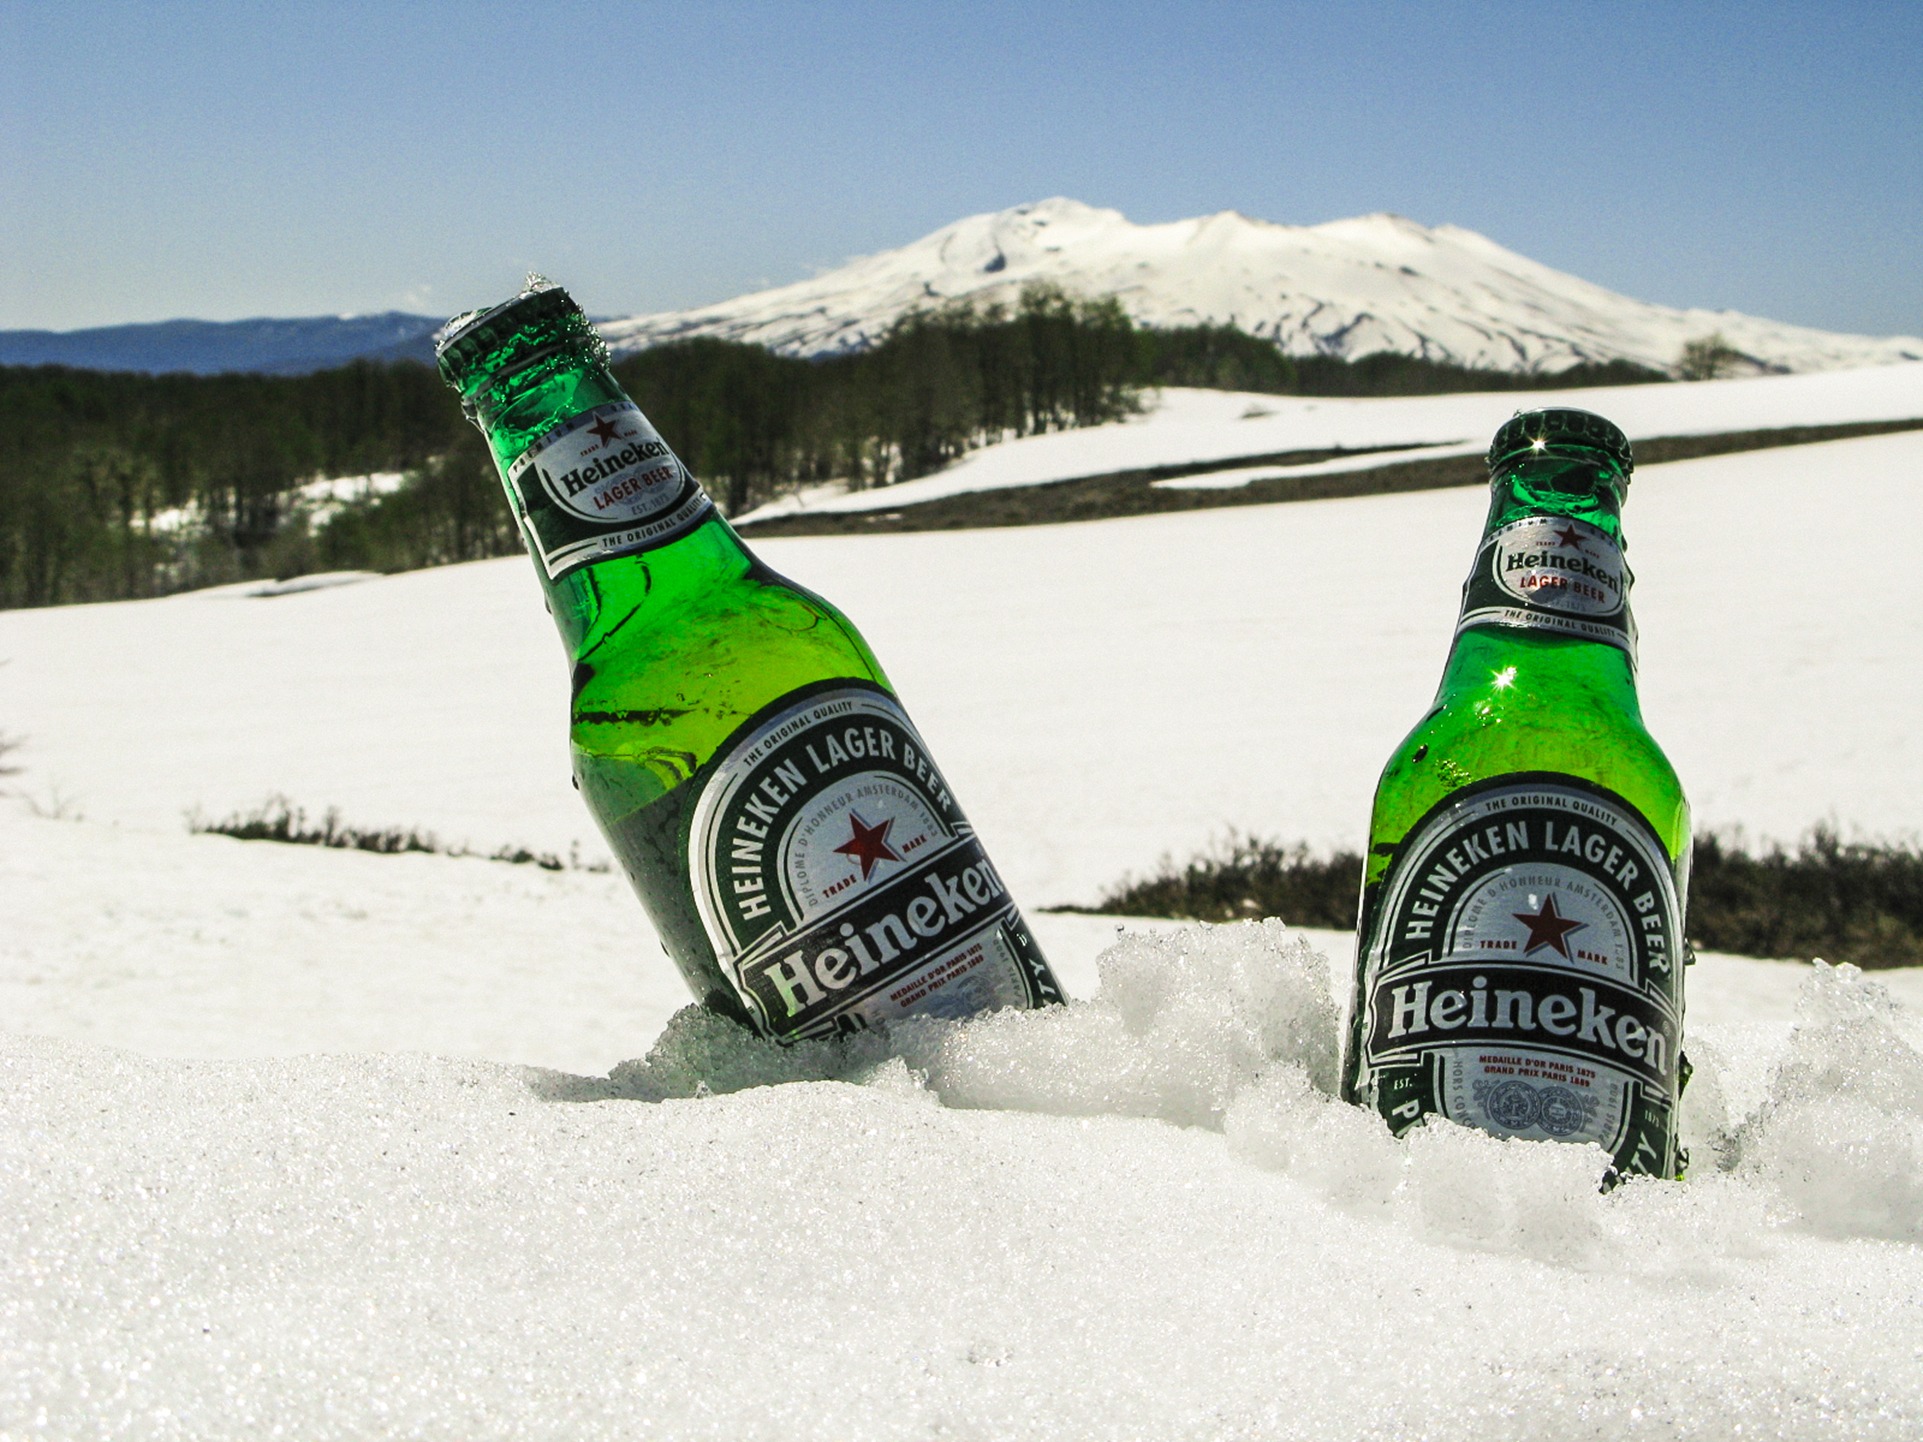 Two bottles of Heineken beer chilled in the snow